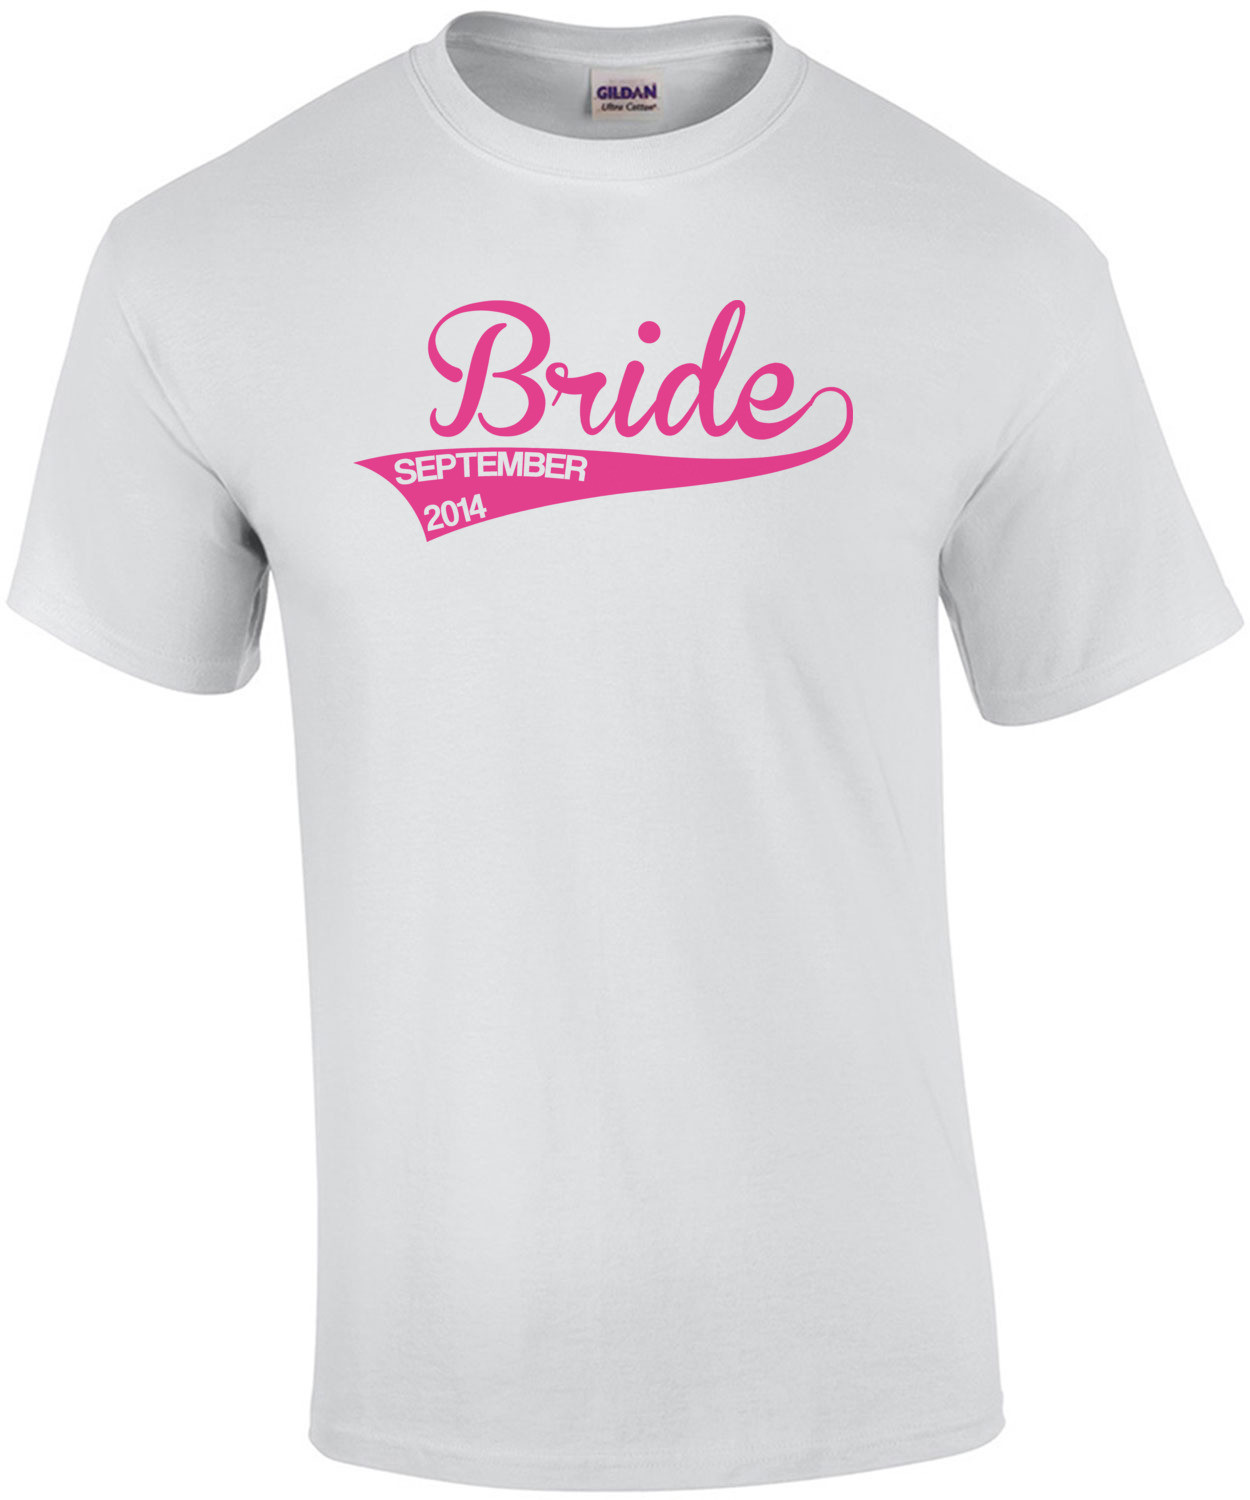 Bride - Wedding Date shirt